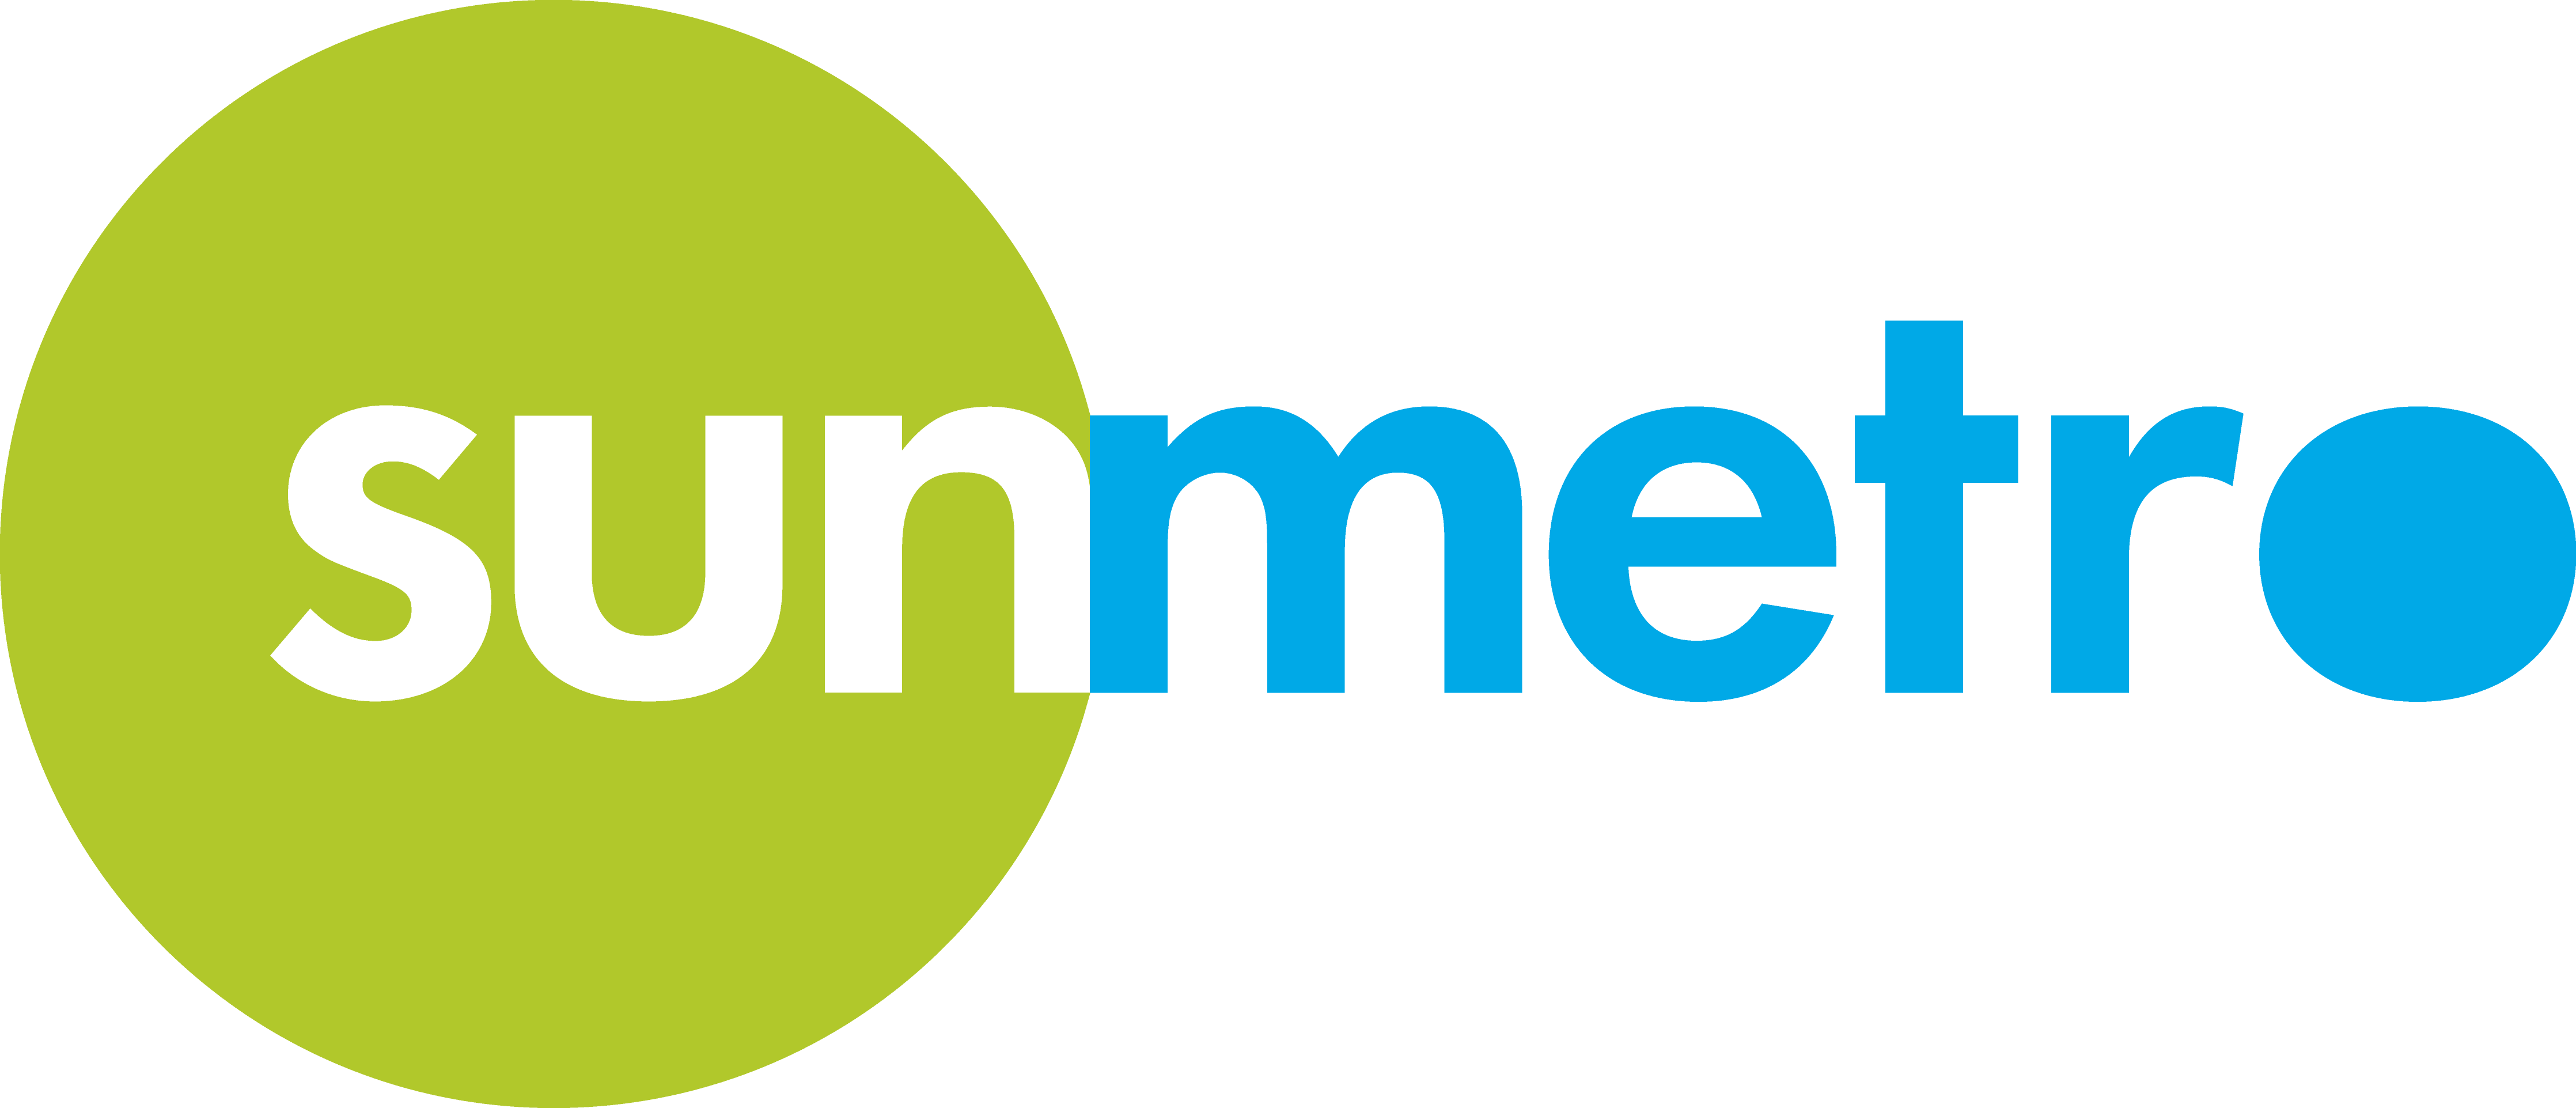 File:Sun Metro logo.png - Wikipedia, the free encyclopedia